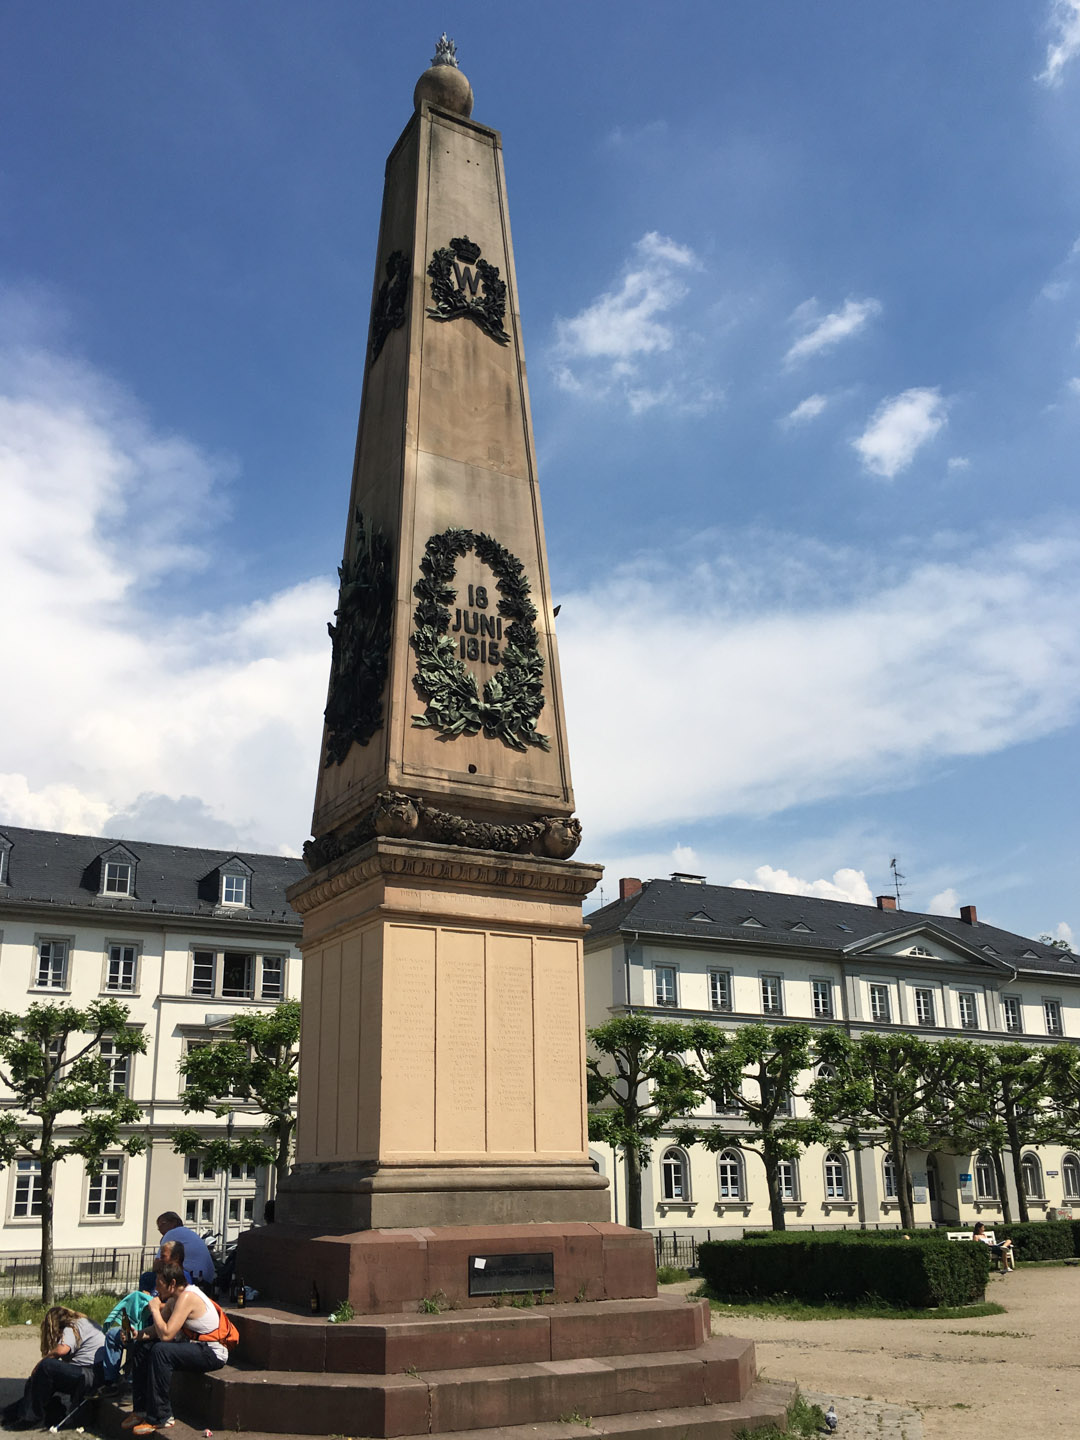 Inscription on the pedestal of the Waterloo-Obelisk: THE MEMORIES IN THE BATTLE OF WATERLOO FALLEN NASSAUER AM 18 JUNI 1815 Luisenplatz